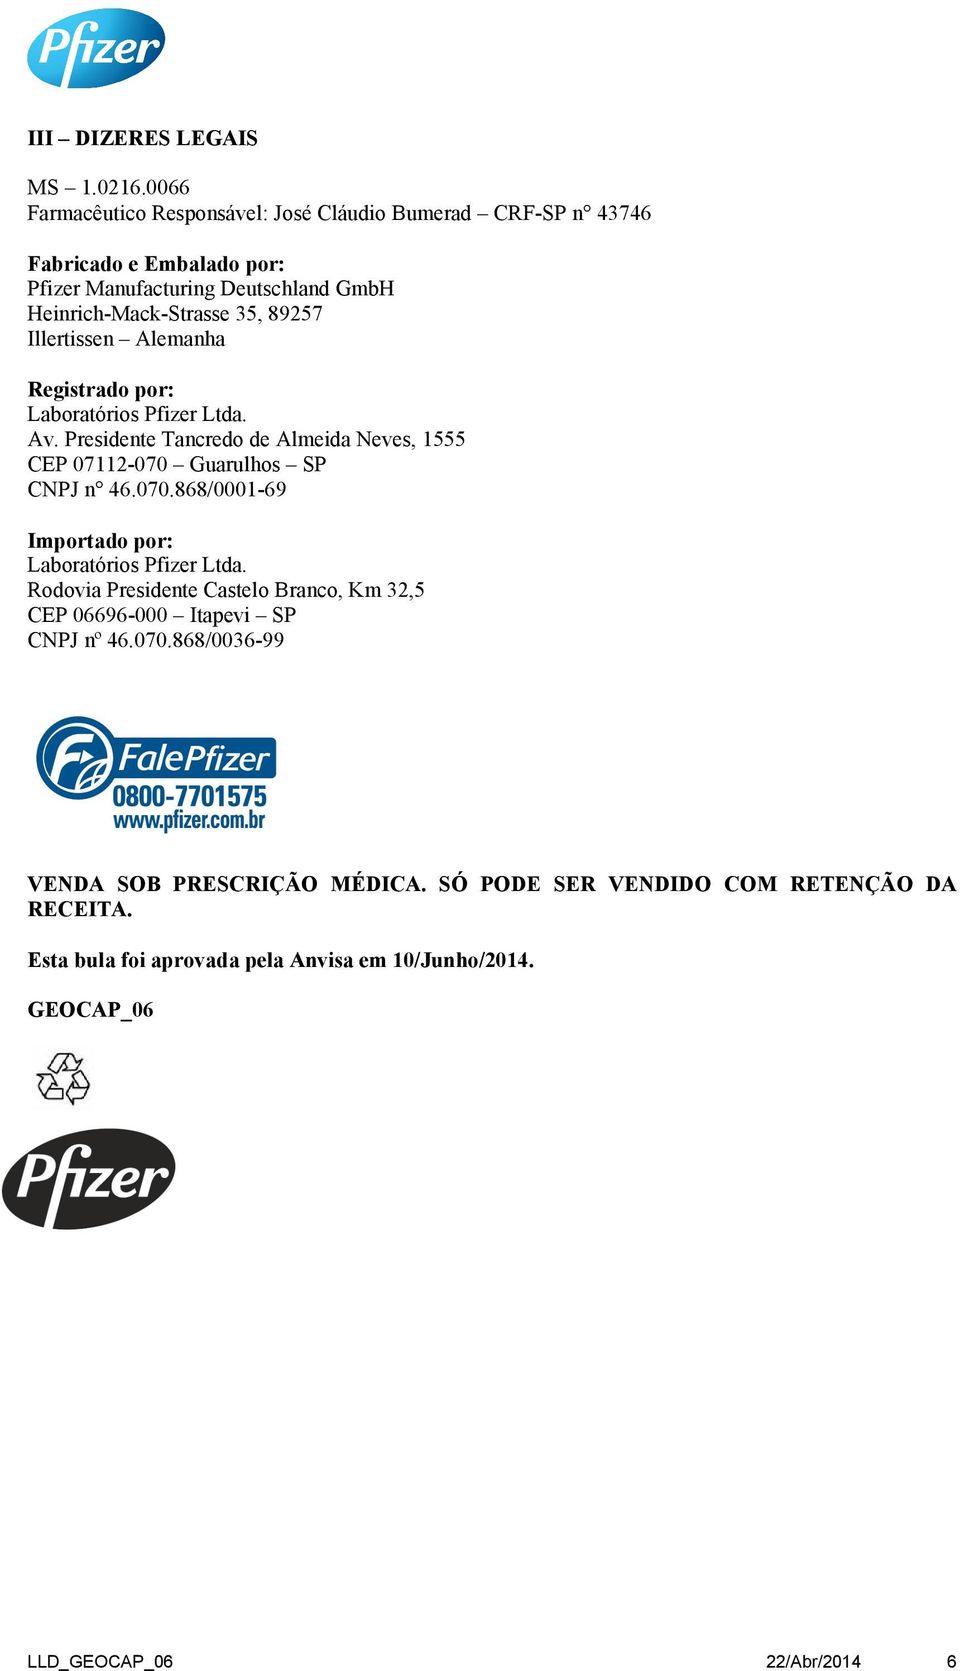 Illertissen Alemanha Registrado por: Laboratórios Pfizer Ltda. Av. Presidente Tancredo de Almeida Neves, 1555 CEP 07112-070 